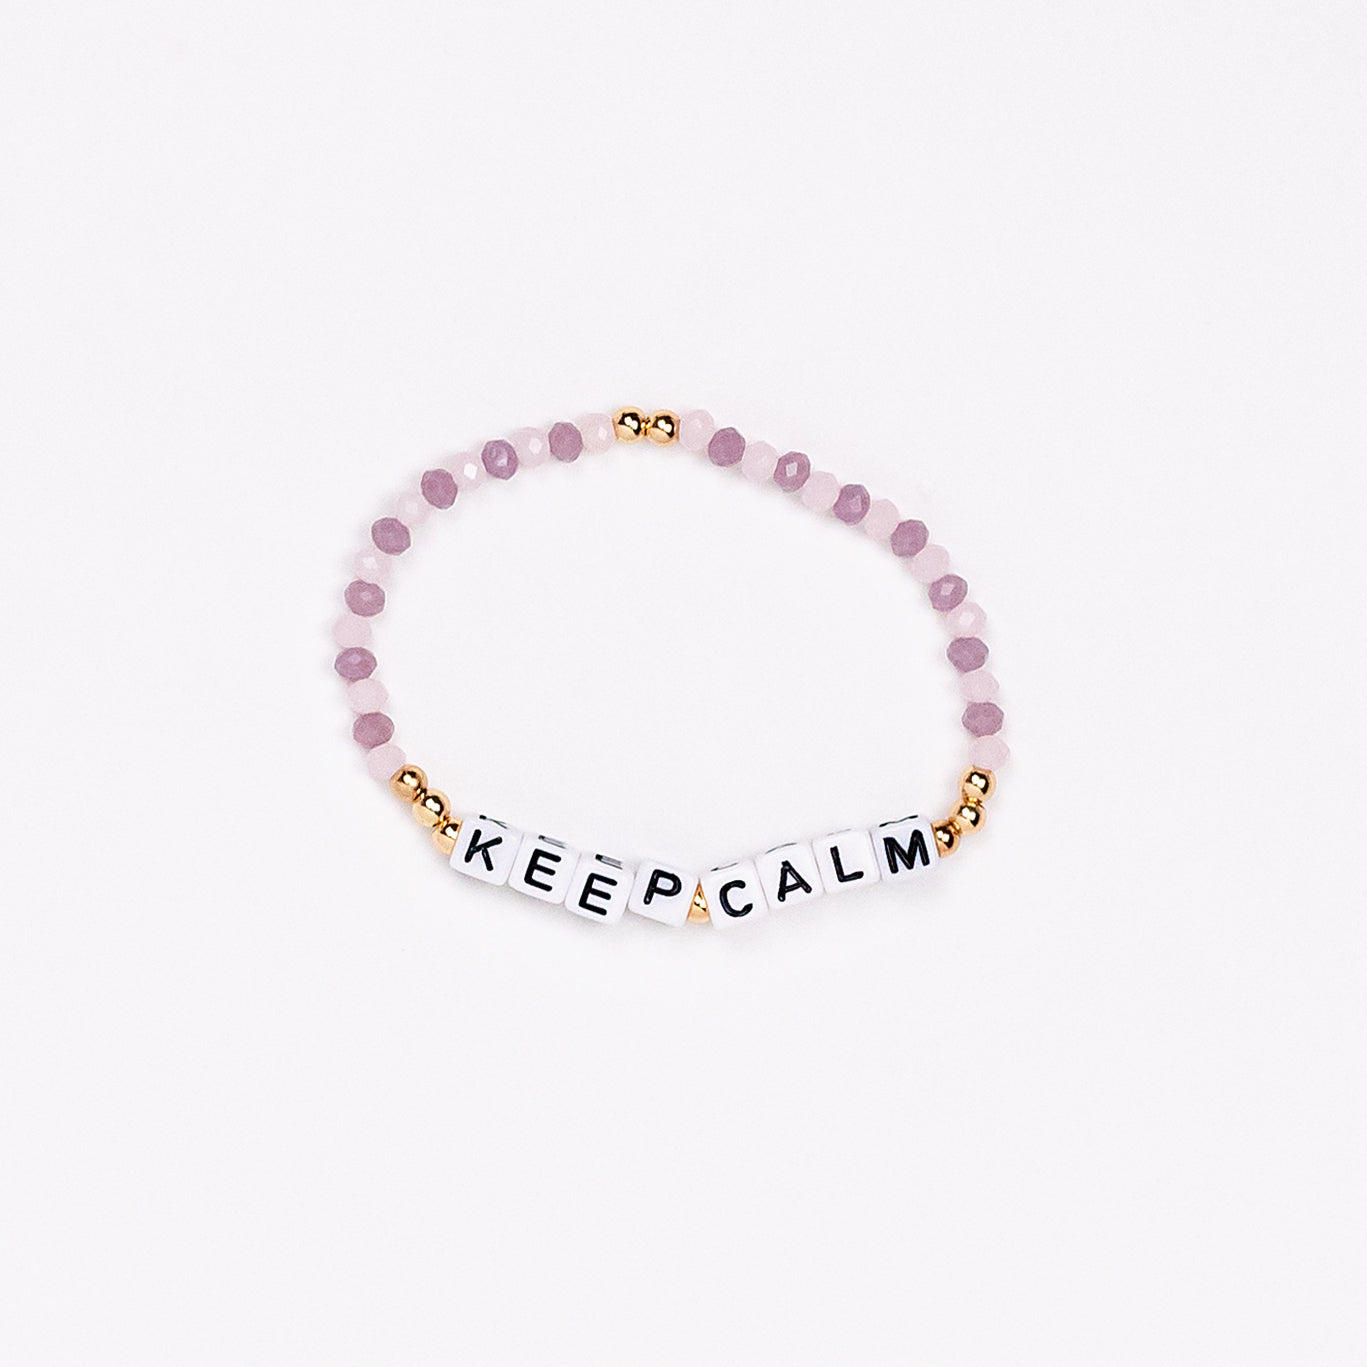 KEEP CALM - Crystal Bracelet